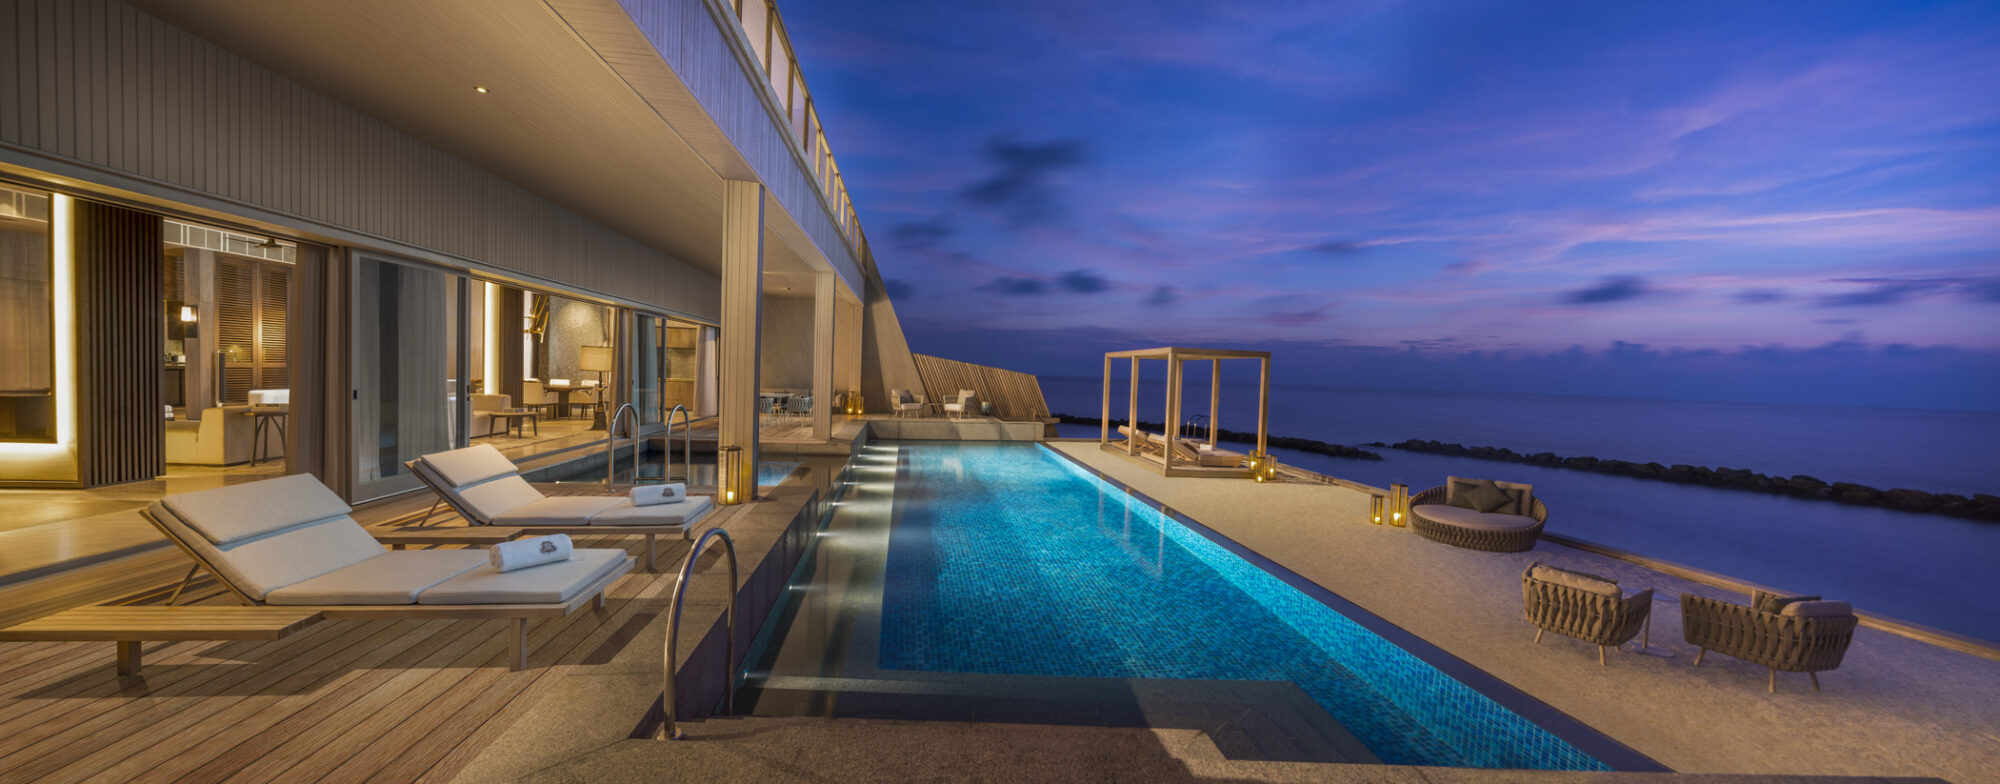 The St. Regis Maldives Vommuli Resort- John Jacob Astor Estate - Main Terrace